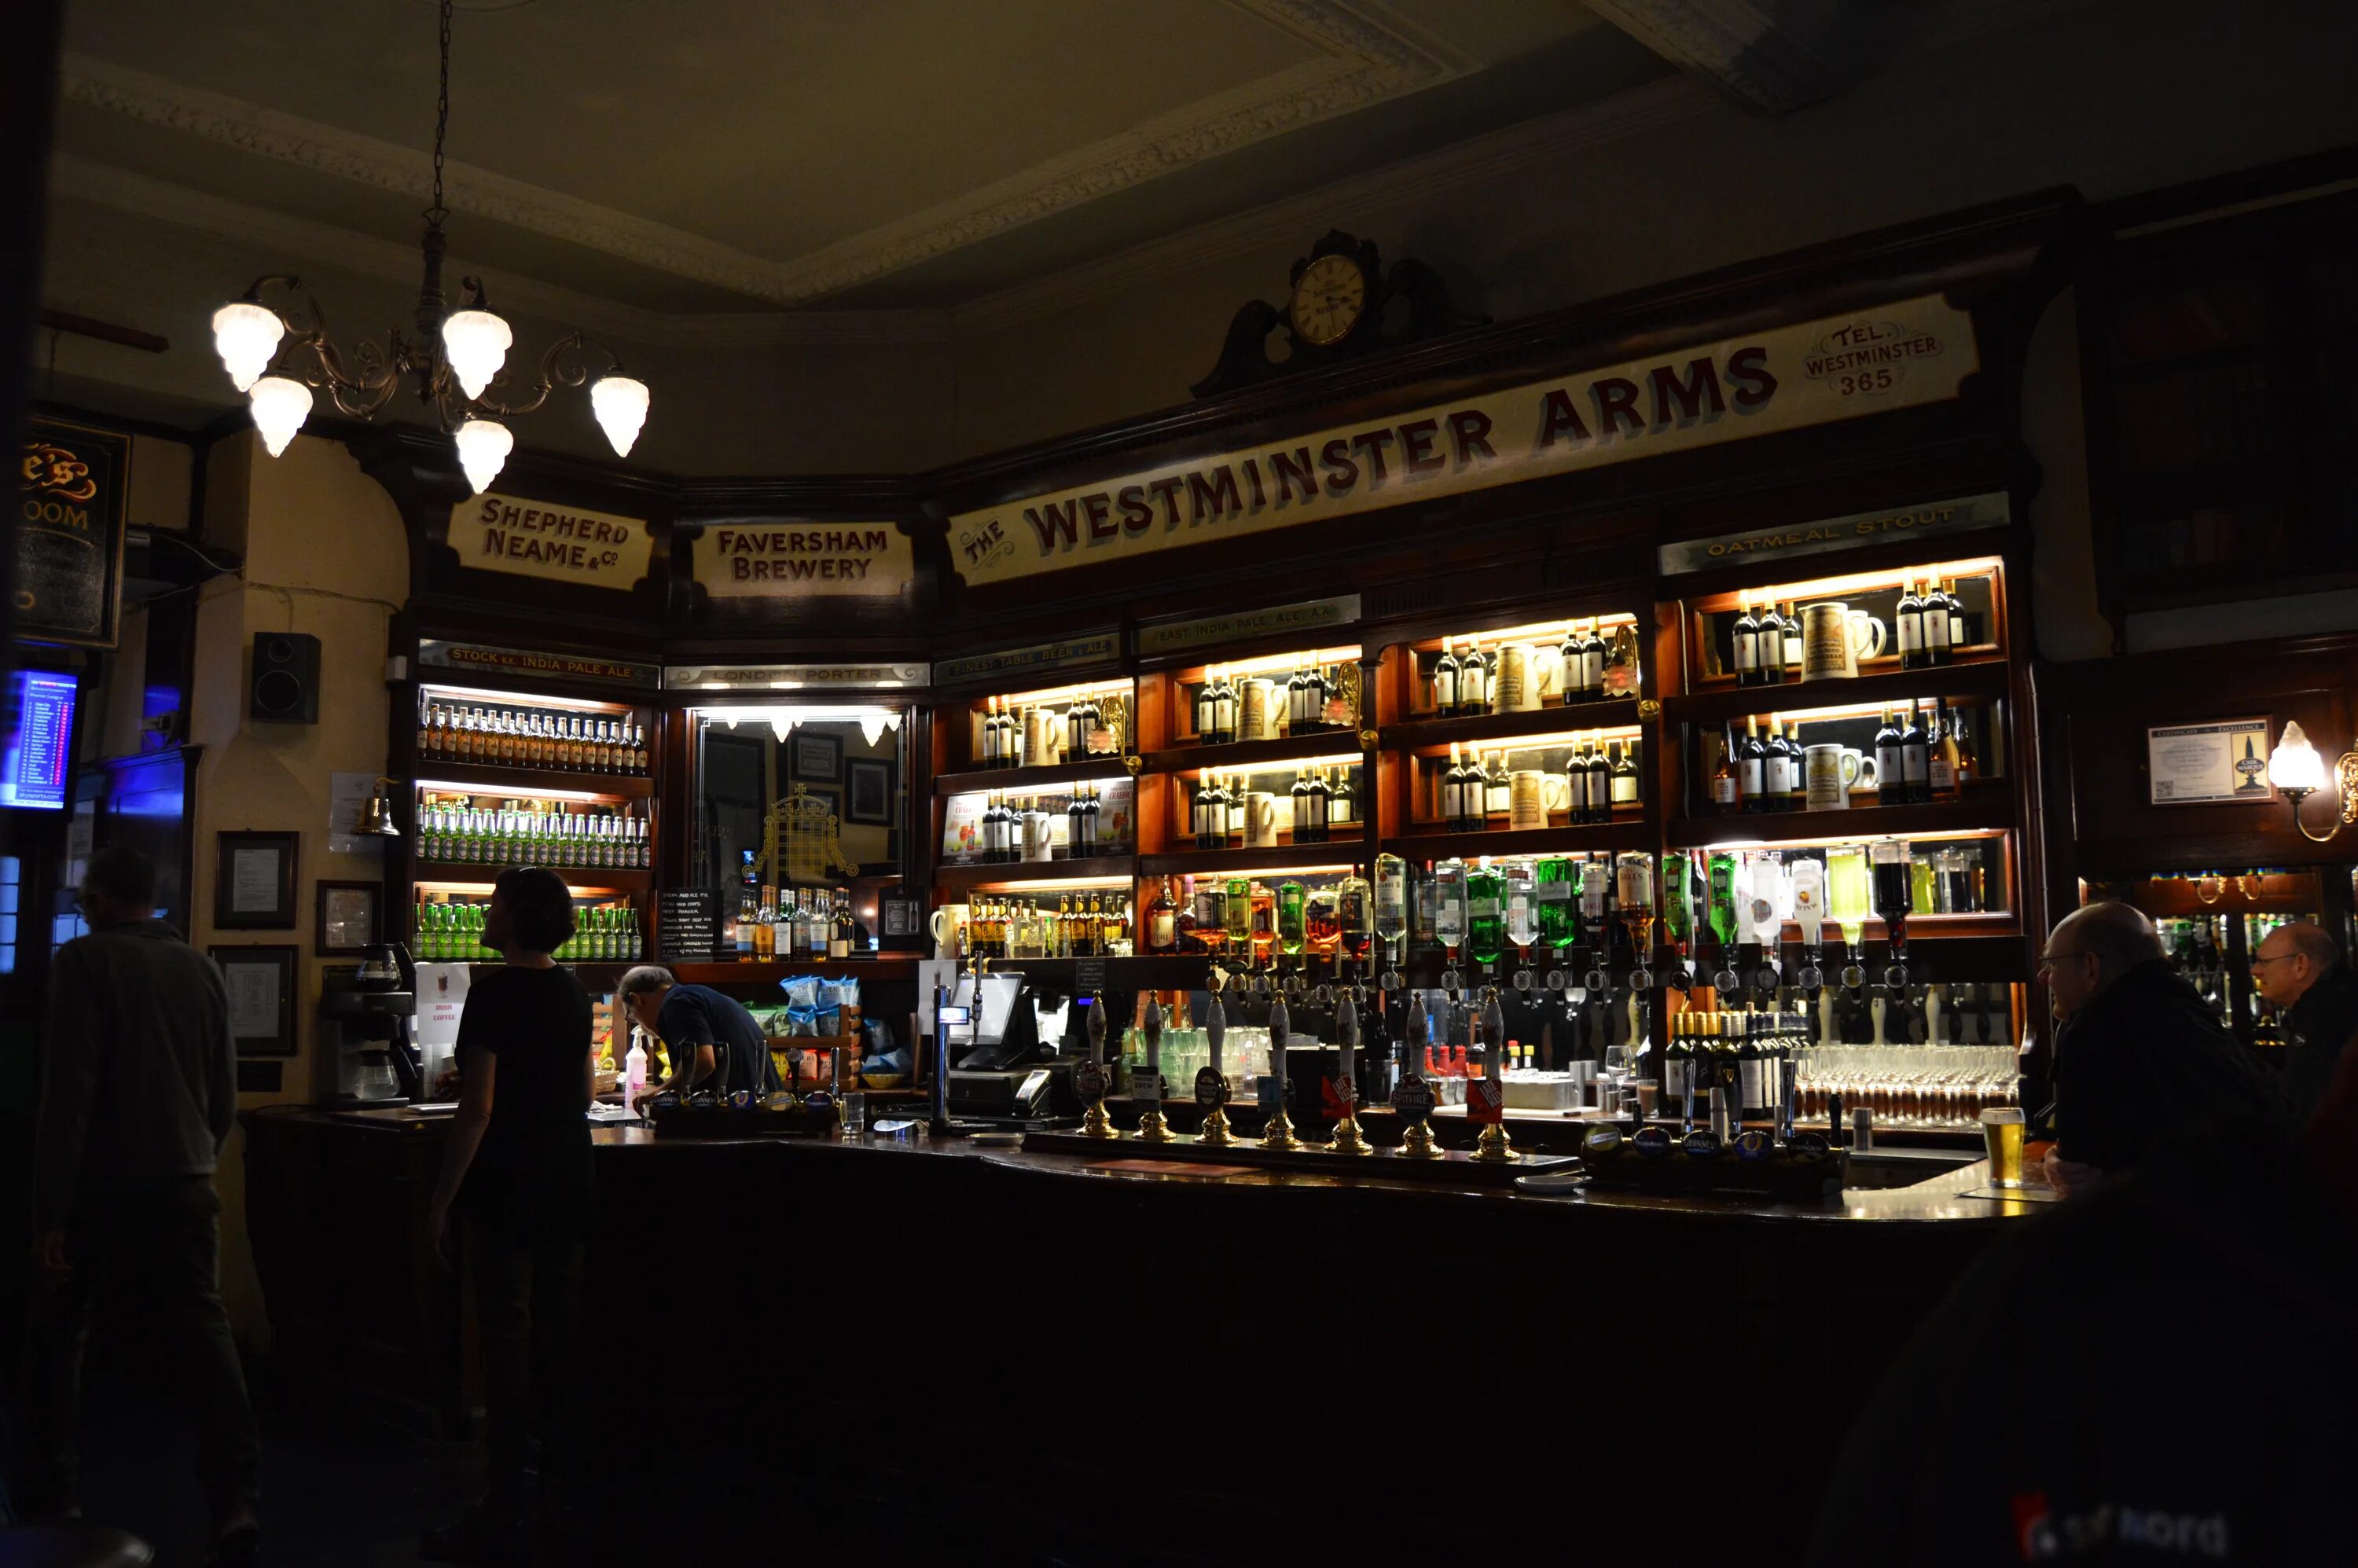 Вестминстер Армс. Westminster Arms что это. Westminster Arms кафе. Файл pub.